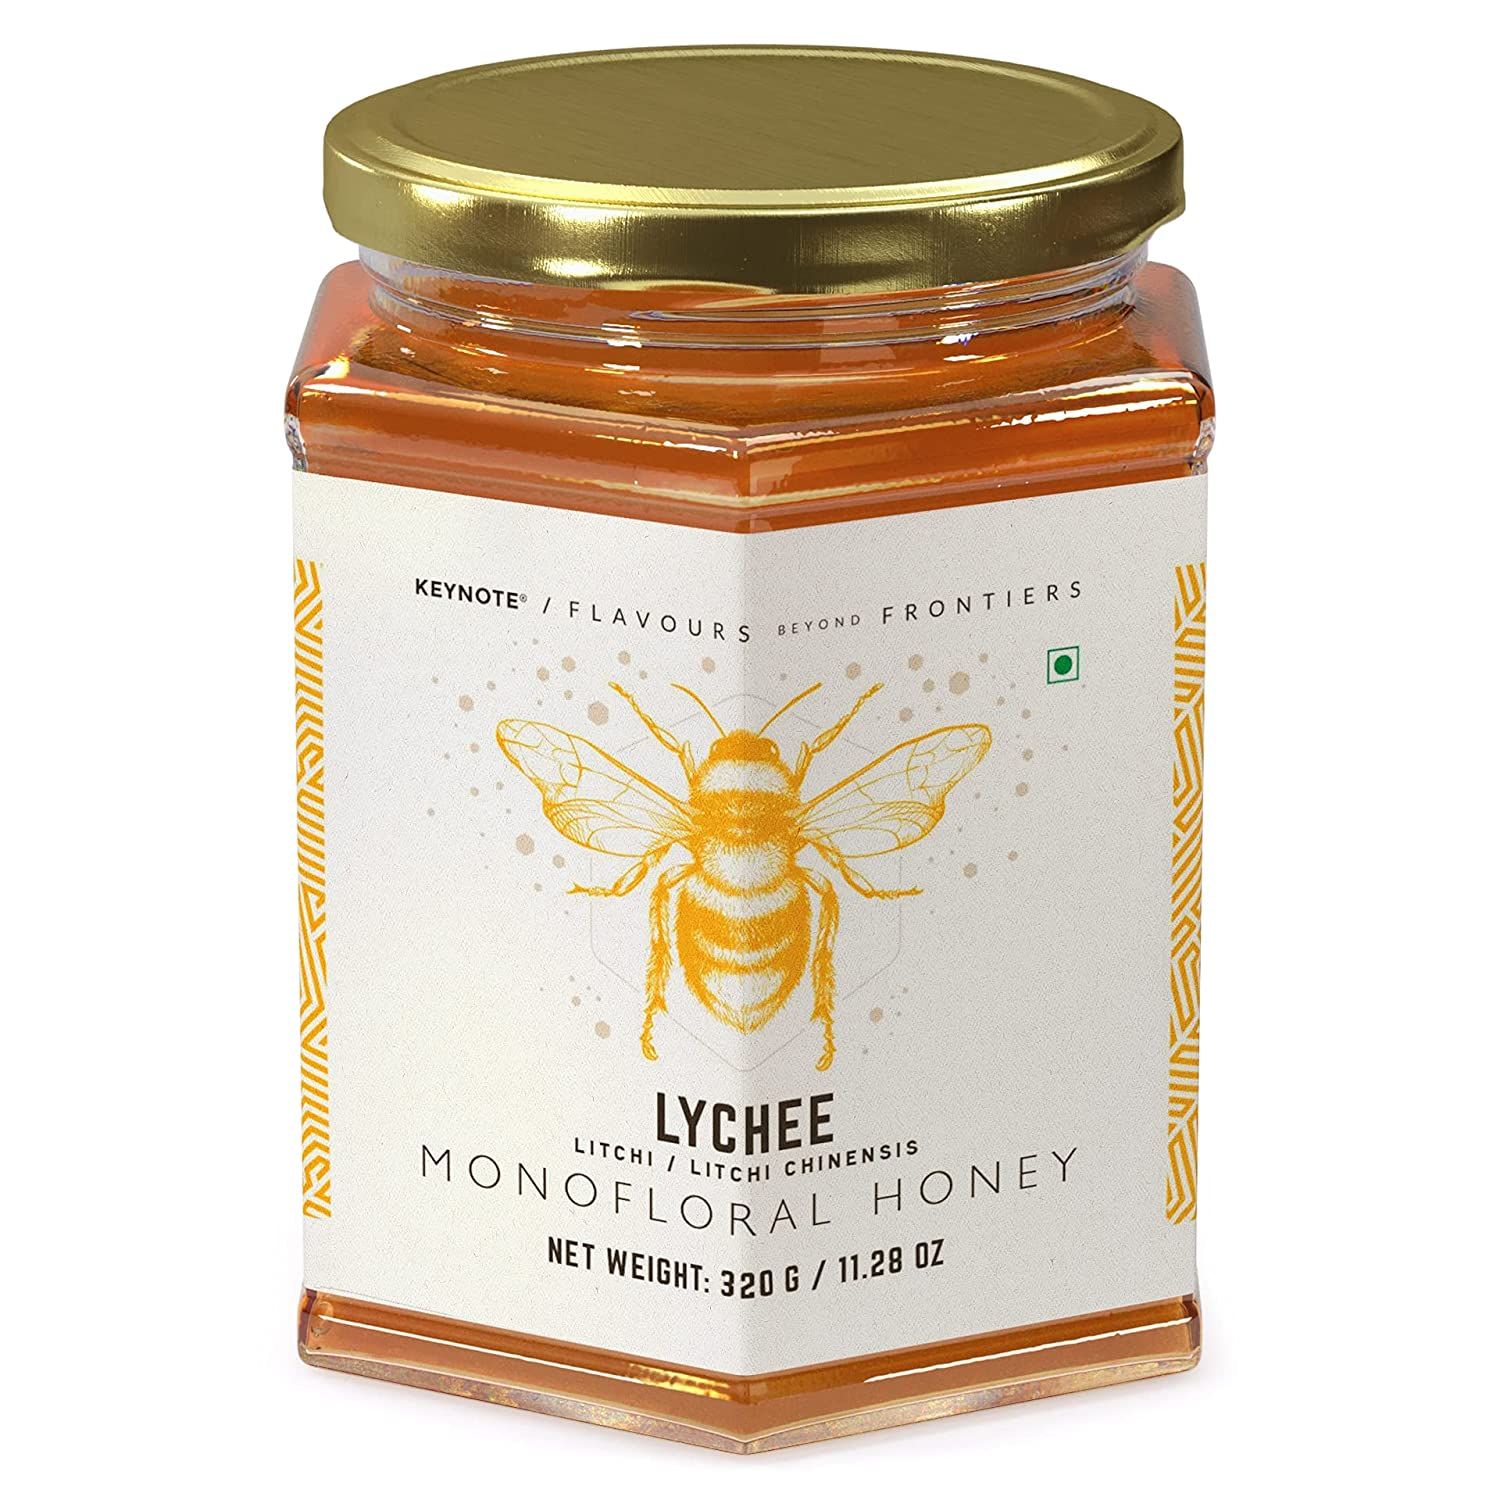 Keynote Lychee Monofloral Honey Image